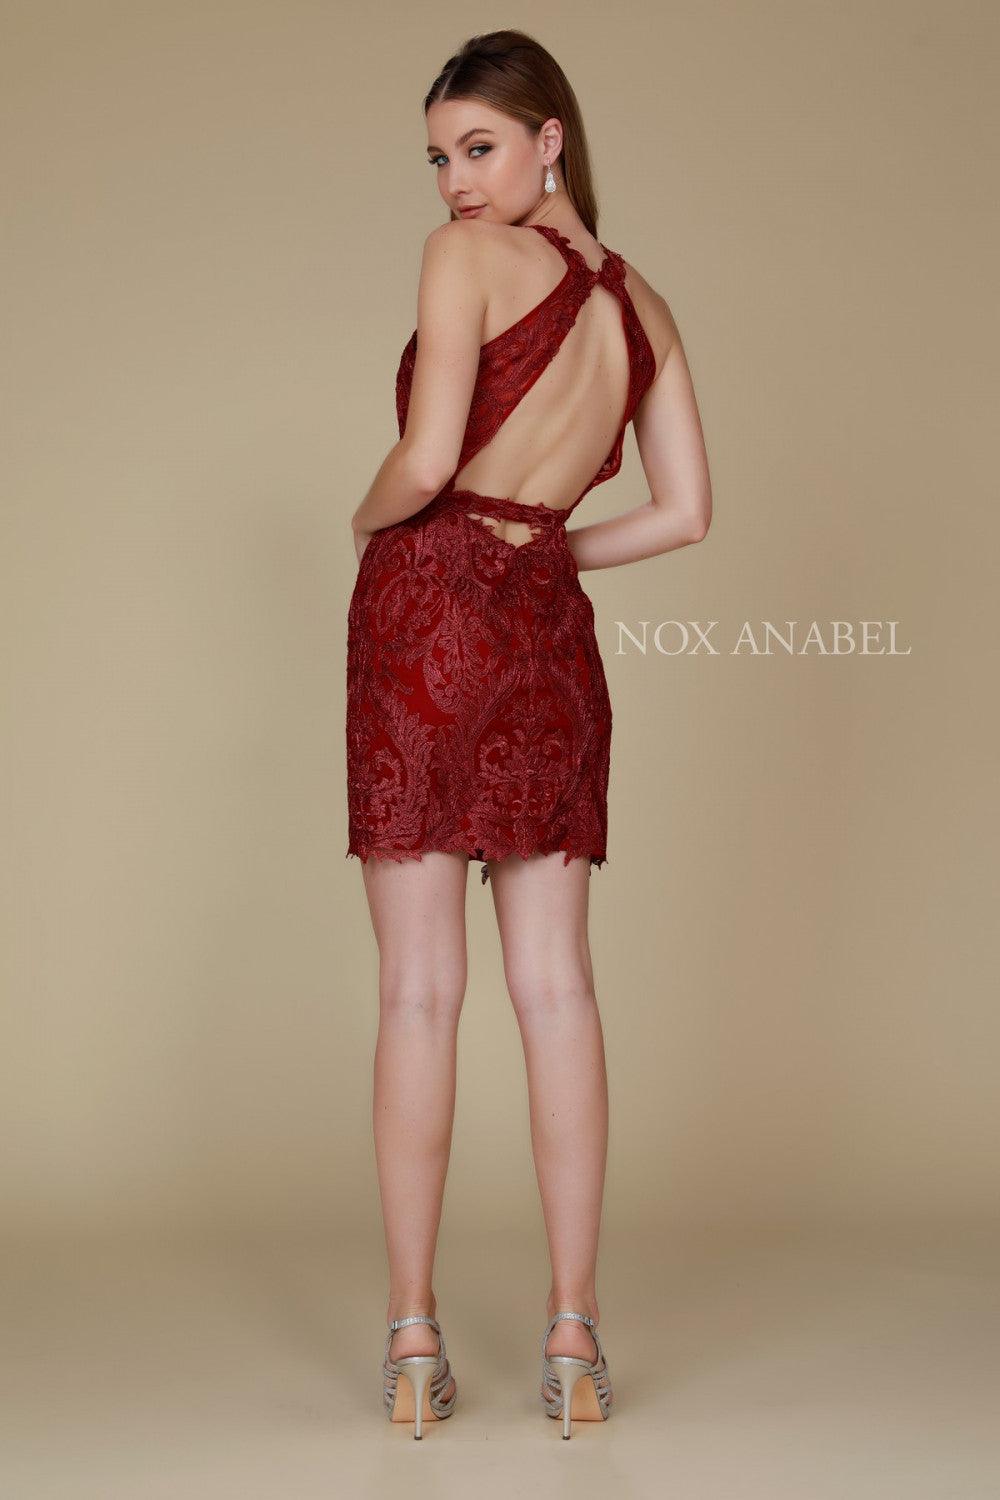 Short High Neck Formal Cocktail Dress - The Dress Outlet Nox Anabel